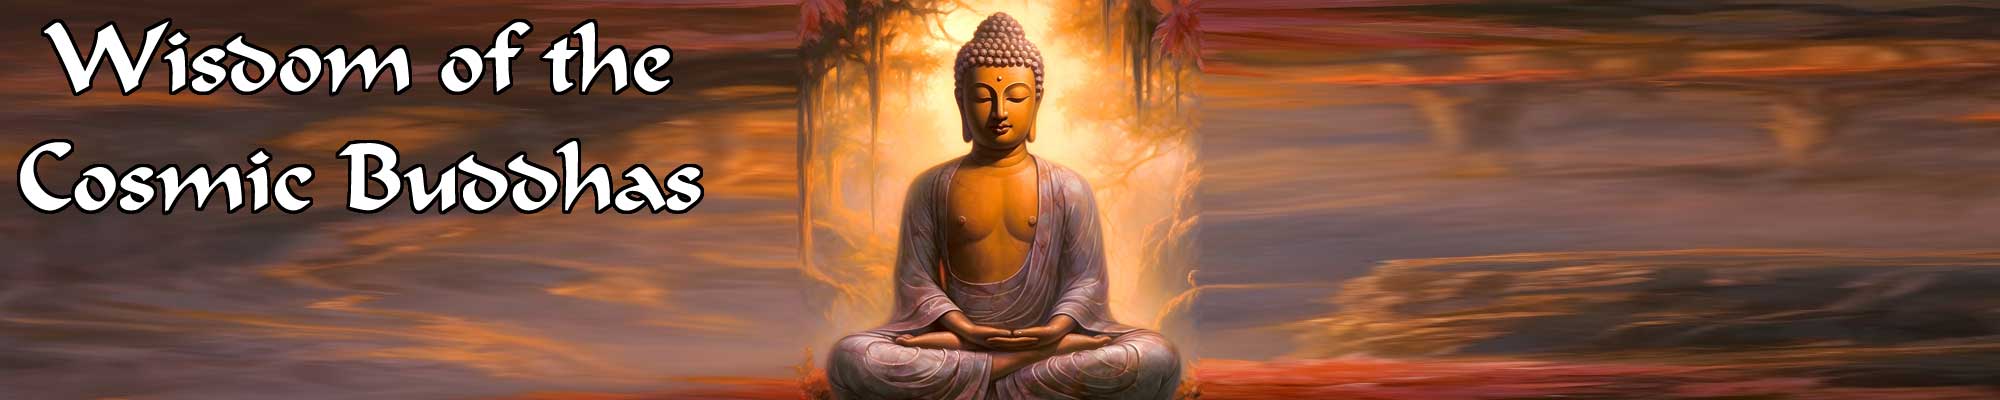 Online LIVE Energy Meditation - QiGong meditation series - Wisdom of the Cosmic Buddhas image1